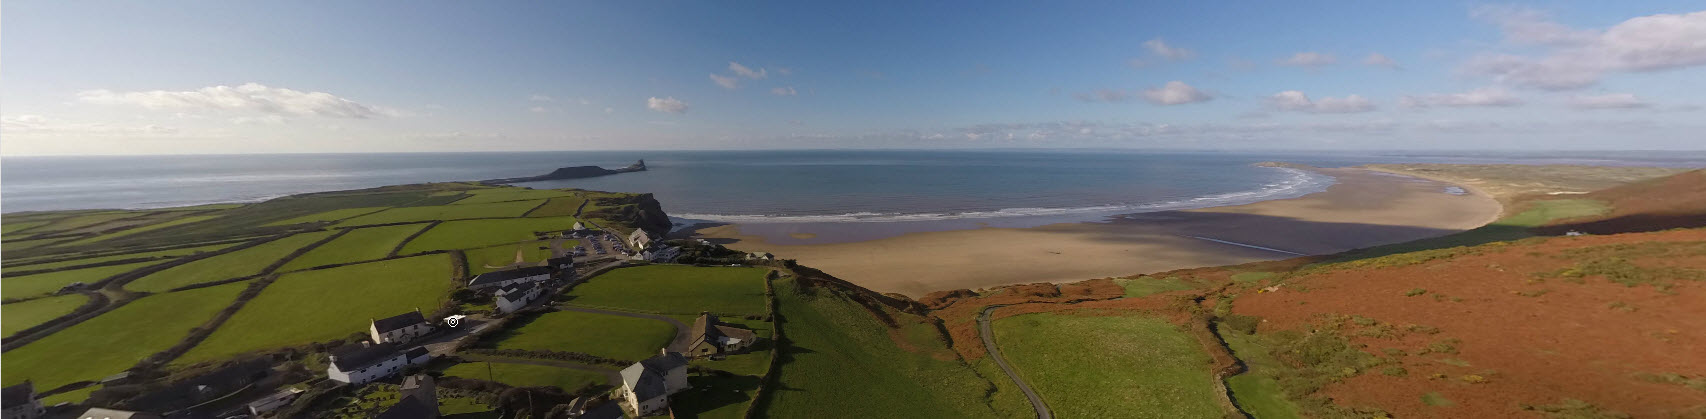 360 interactive aerial panorama of Rhossili, Swansea, South Wales, UK